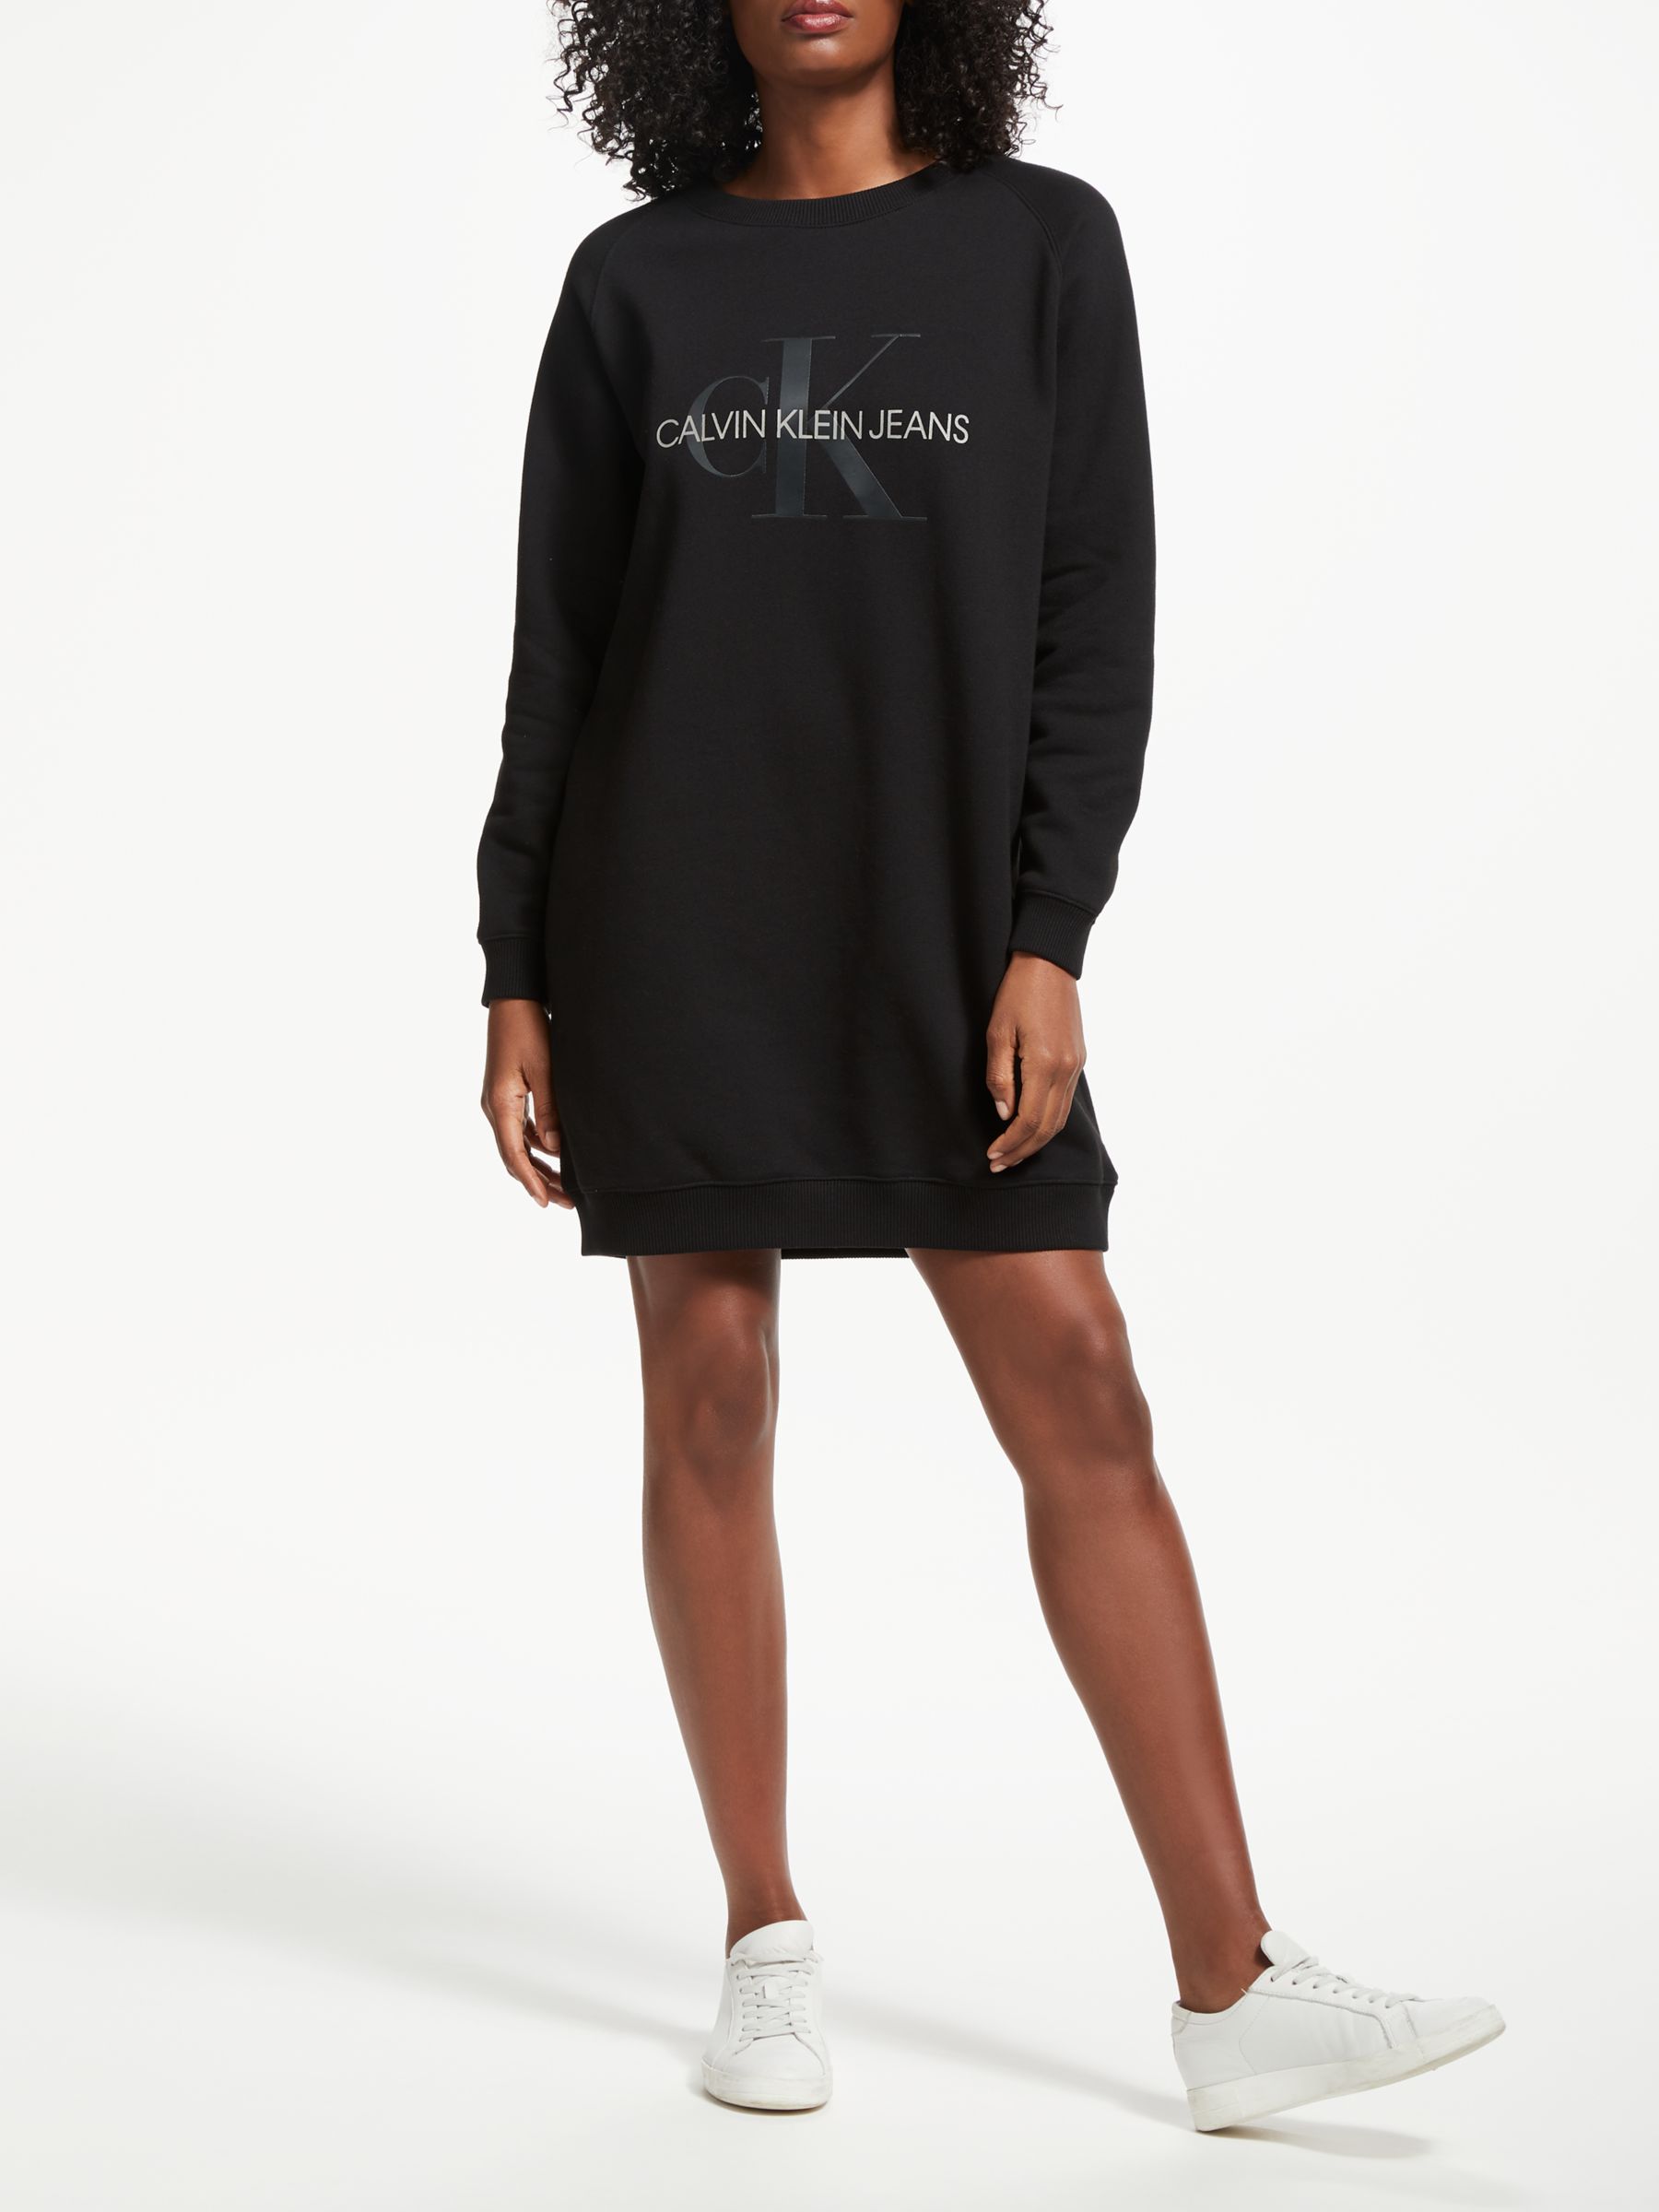 calvin klein logo sweatshirt dress